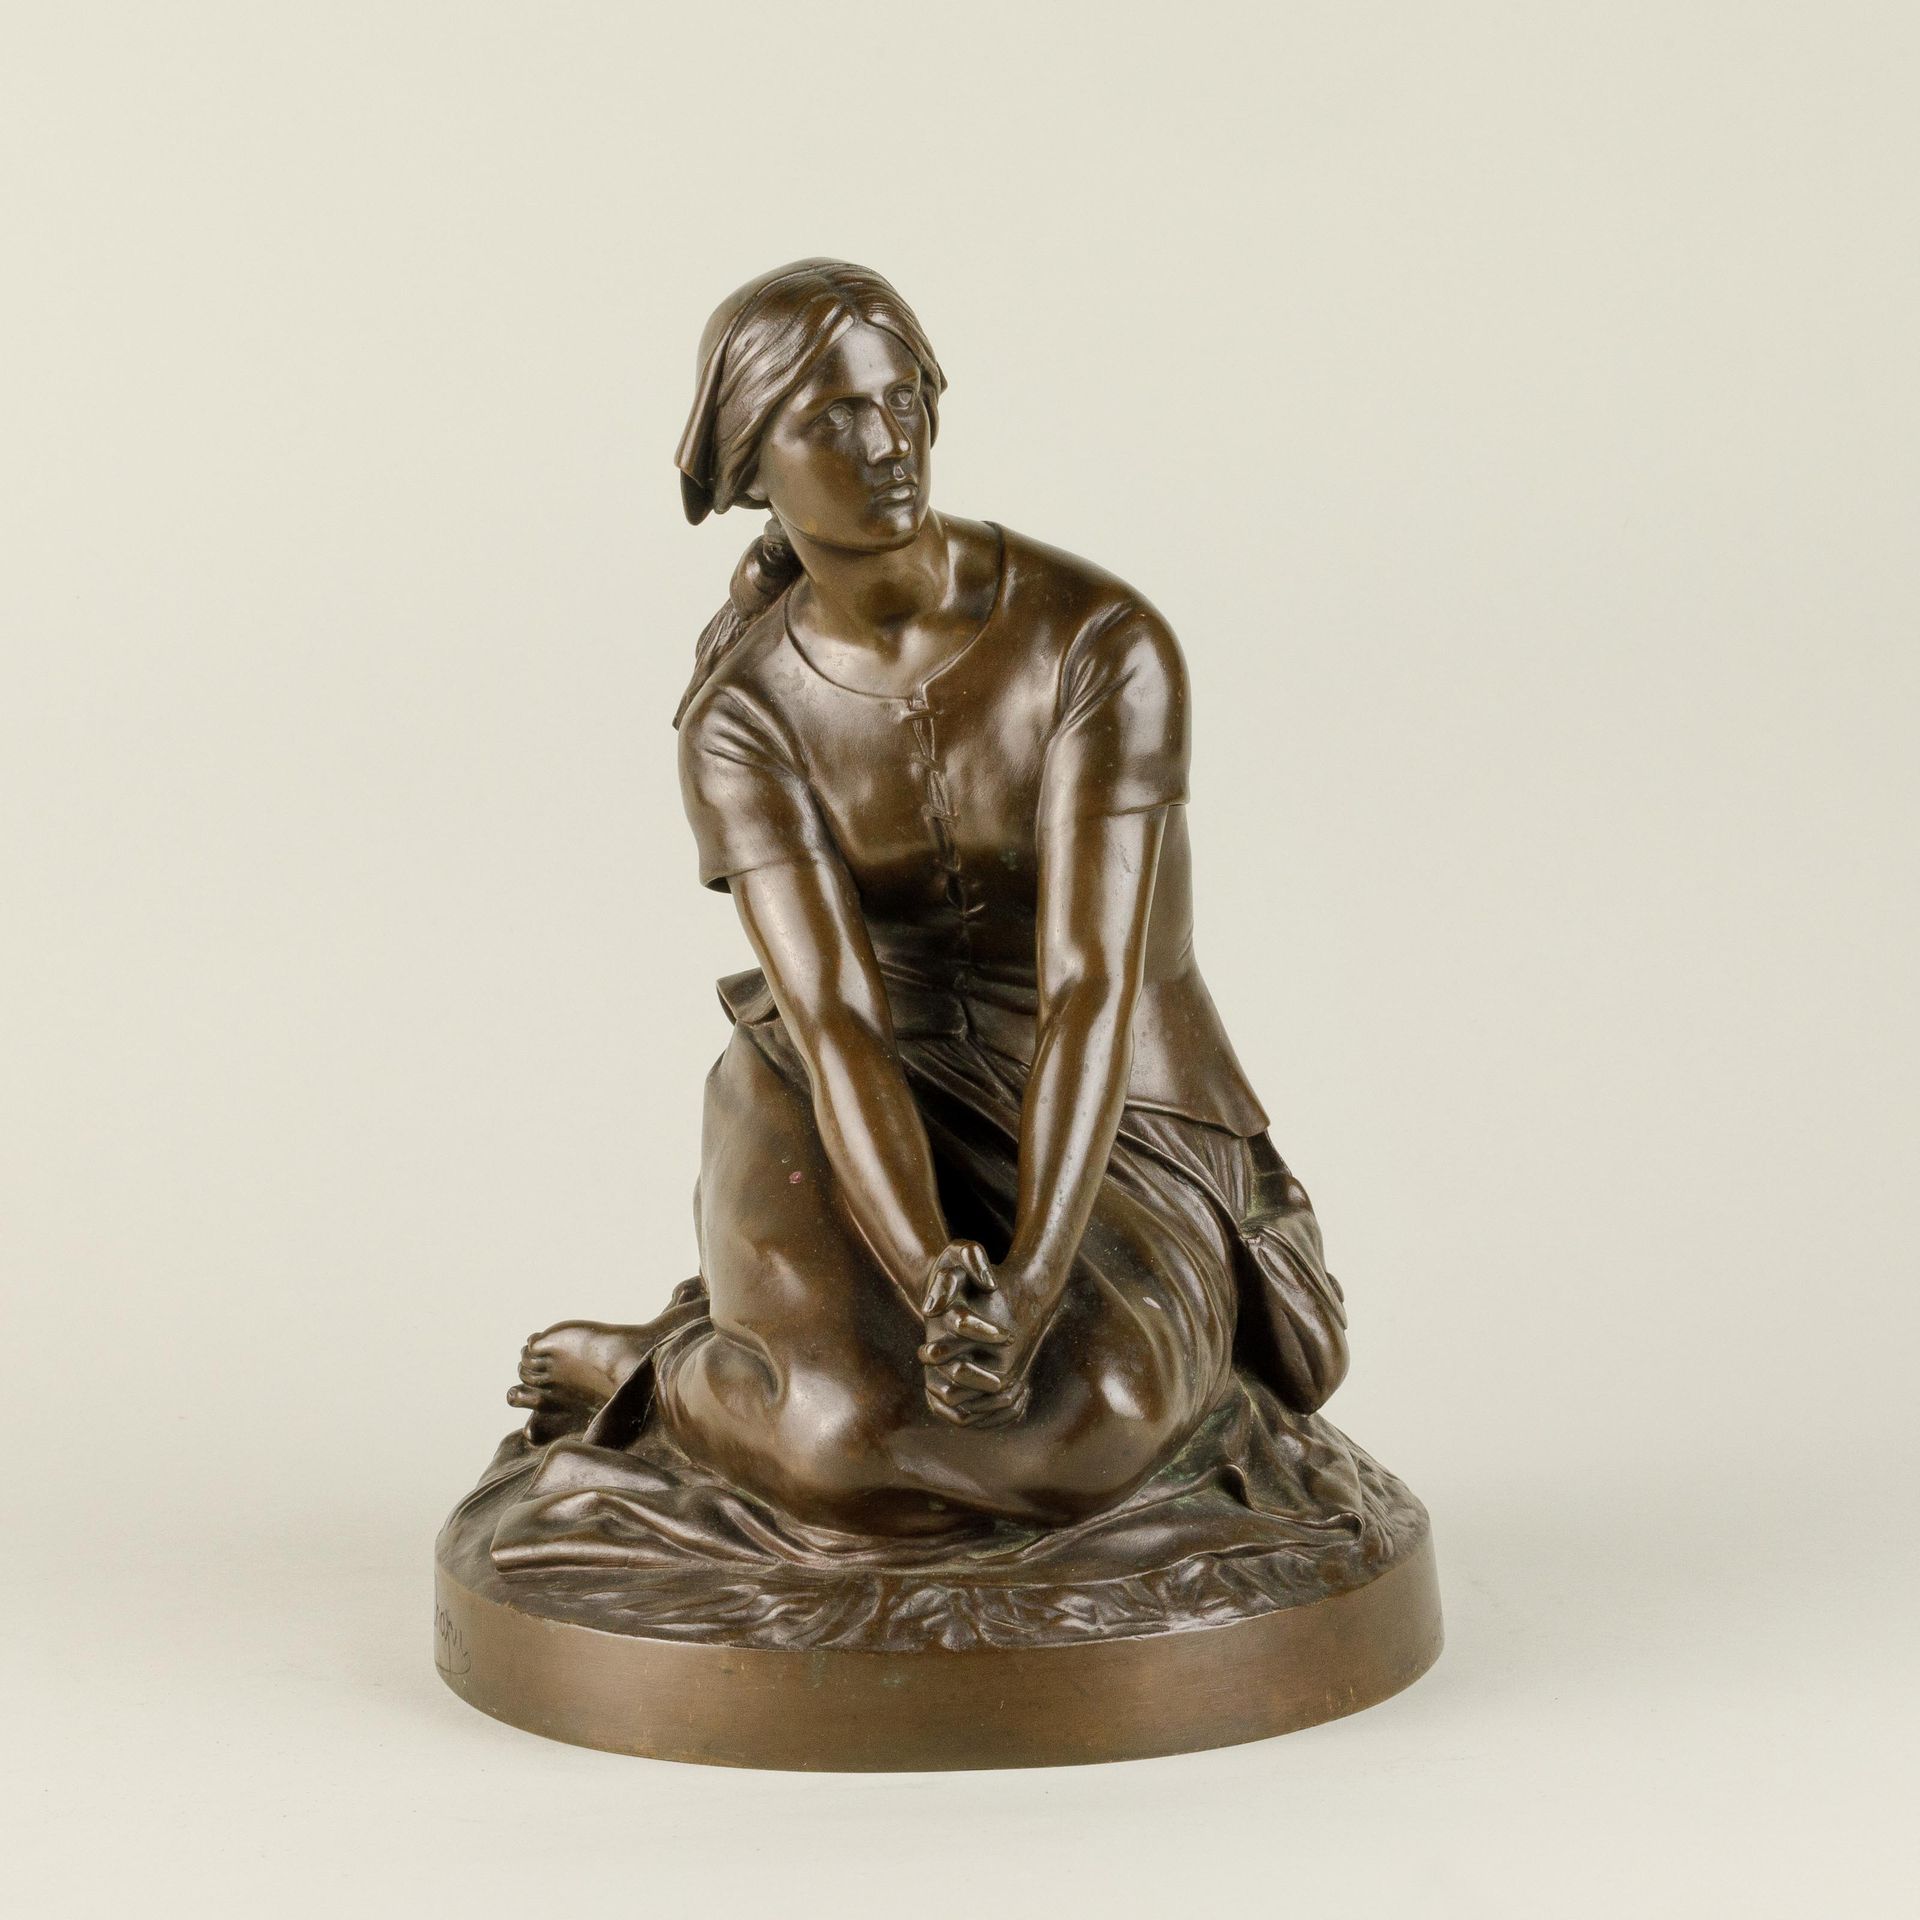 Henri CHAPU (1833-1891) 圣女贞德》。

青铜，棕色铜锈。签名为 "查普"。

铸造厂印章 "F.Barbédienne Fondeur"&hellip;